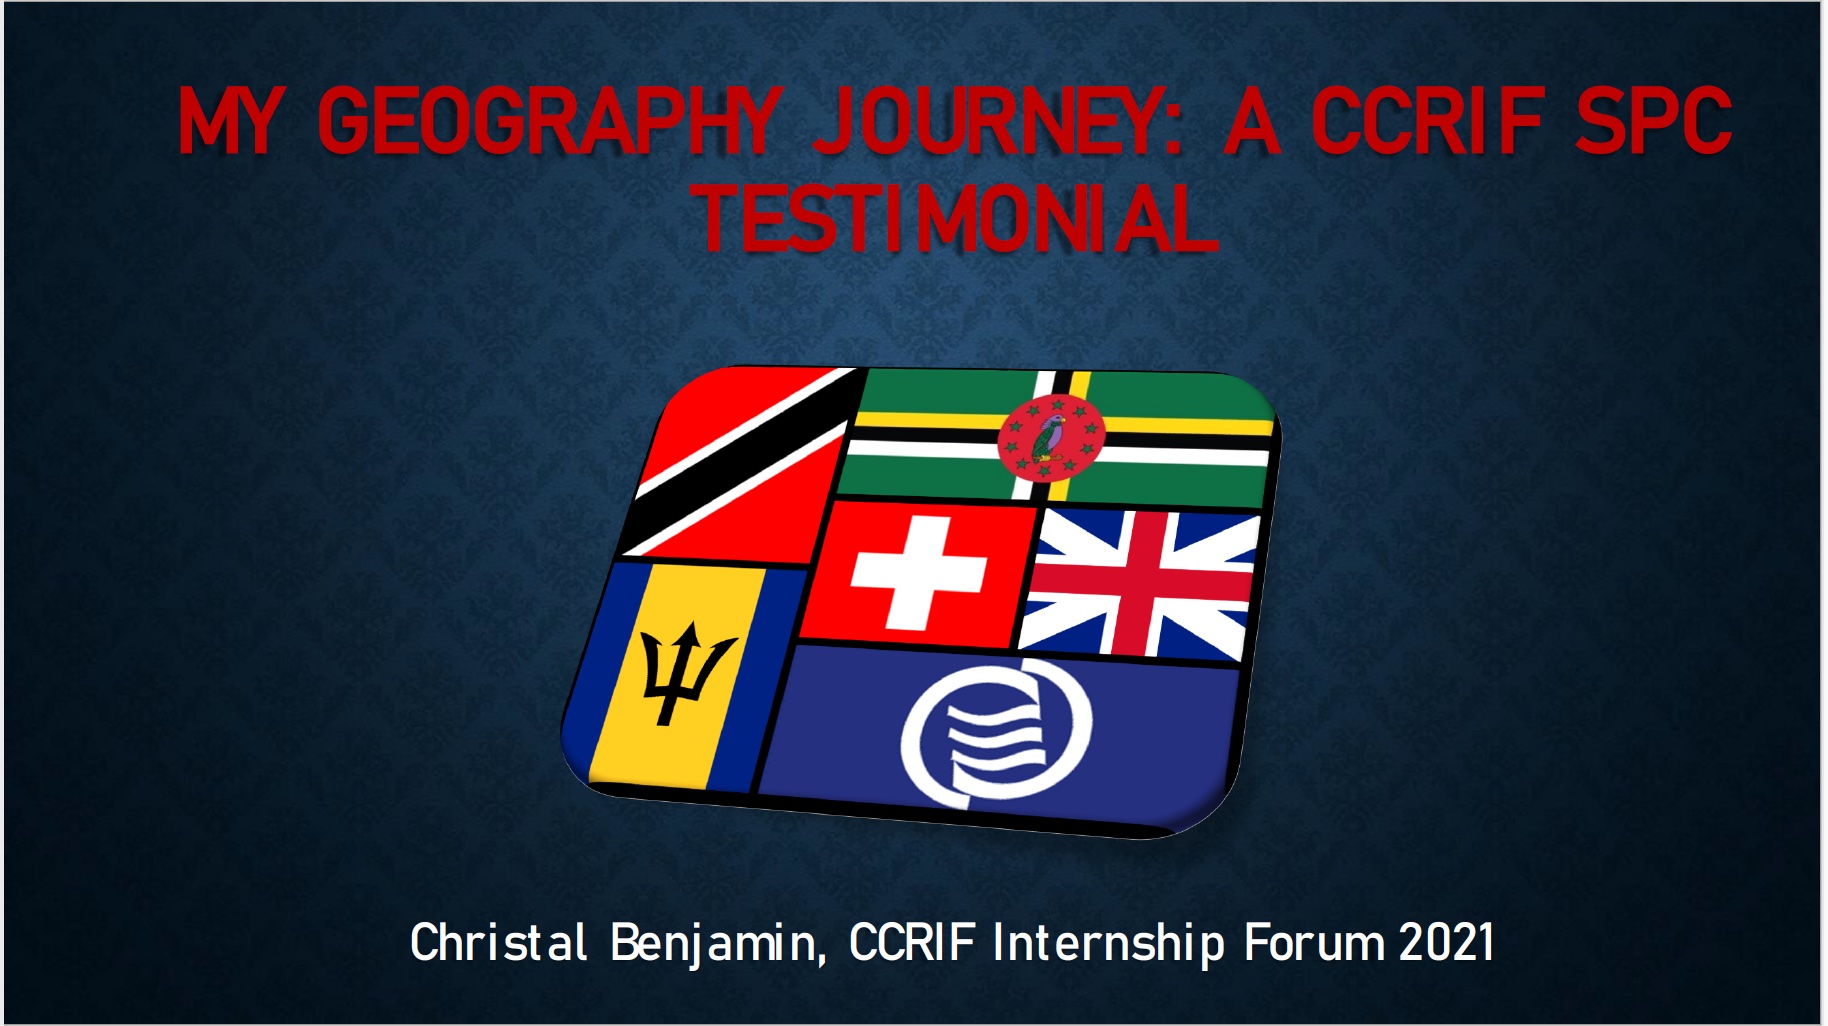 My Geography Journey: A CRRIF SPC Testimonial